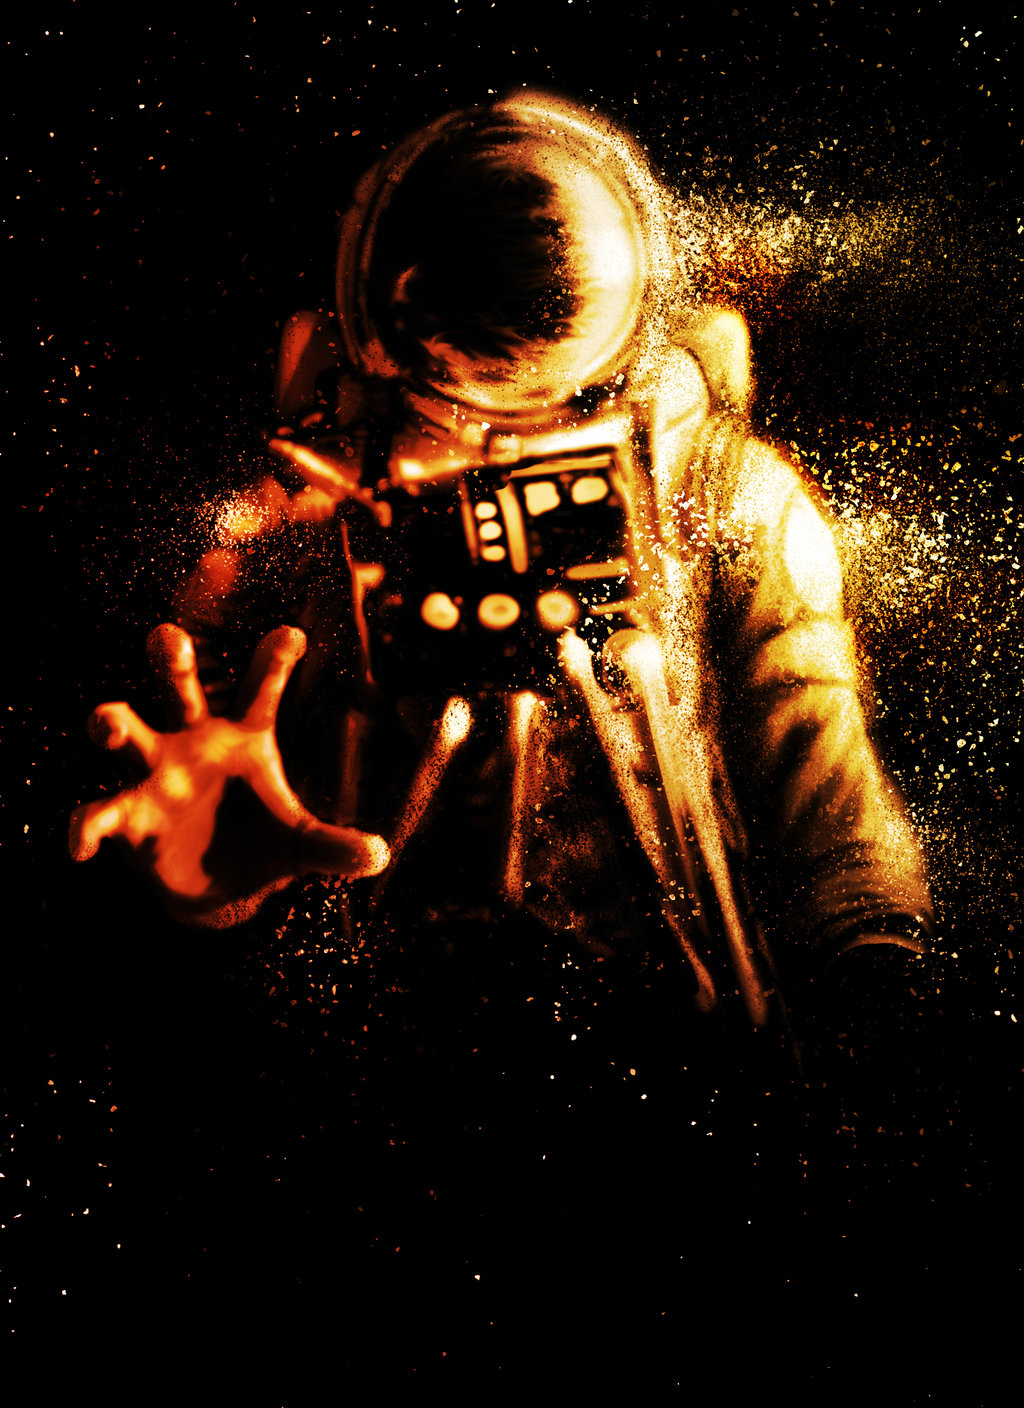 Burning Astronaut Wallpaper - WallpaperSafari